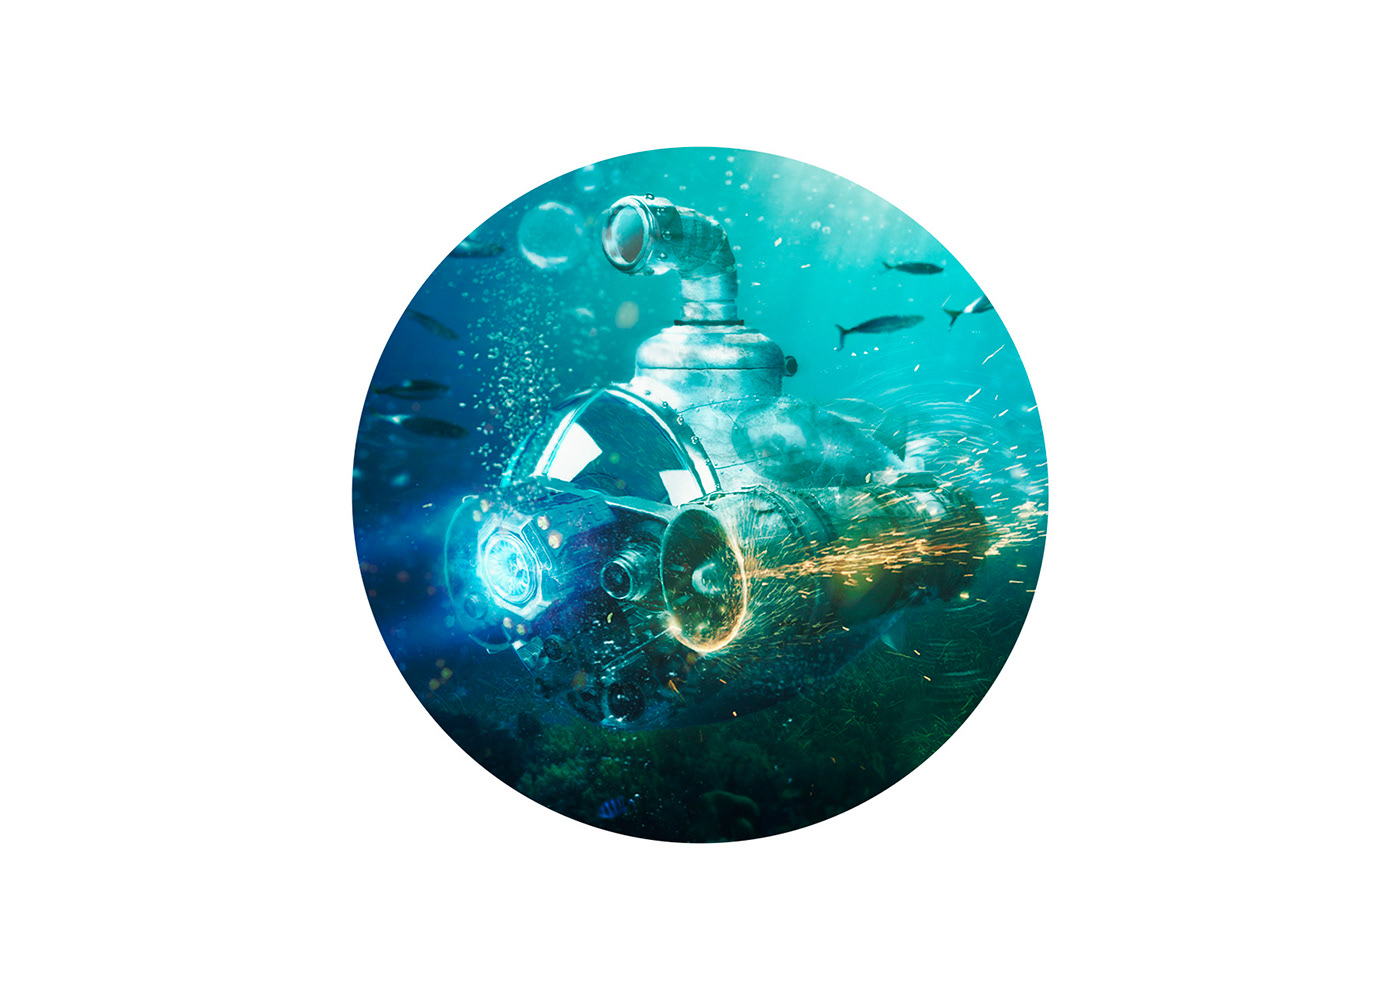 Brazil campinas Desktopografy Nature photomanipulation photoshop sea underwater wallpaper